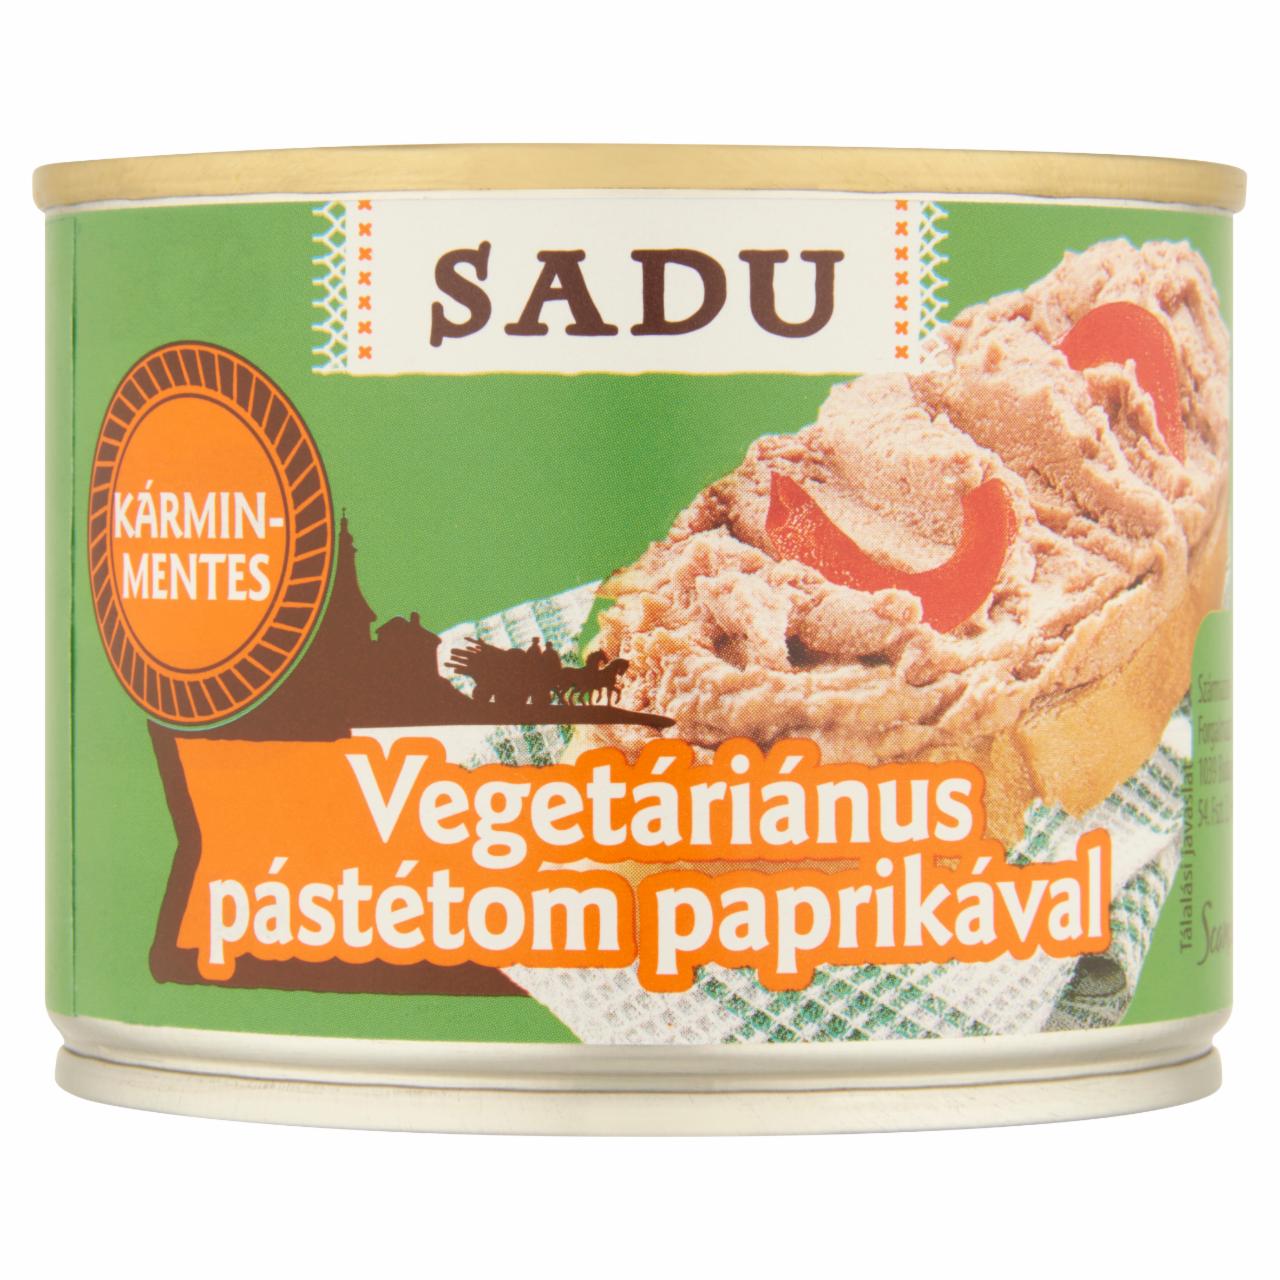 Képek - Sadu vegetáriánus pástétom paprikával 200 g